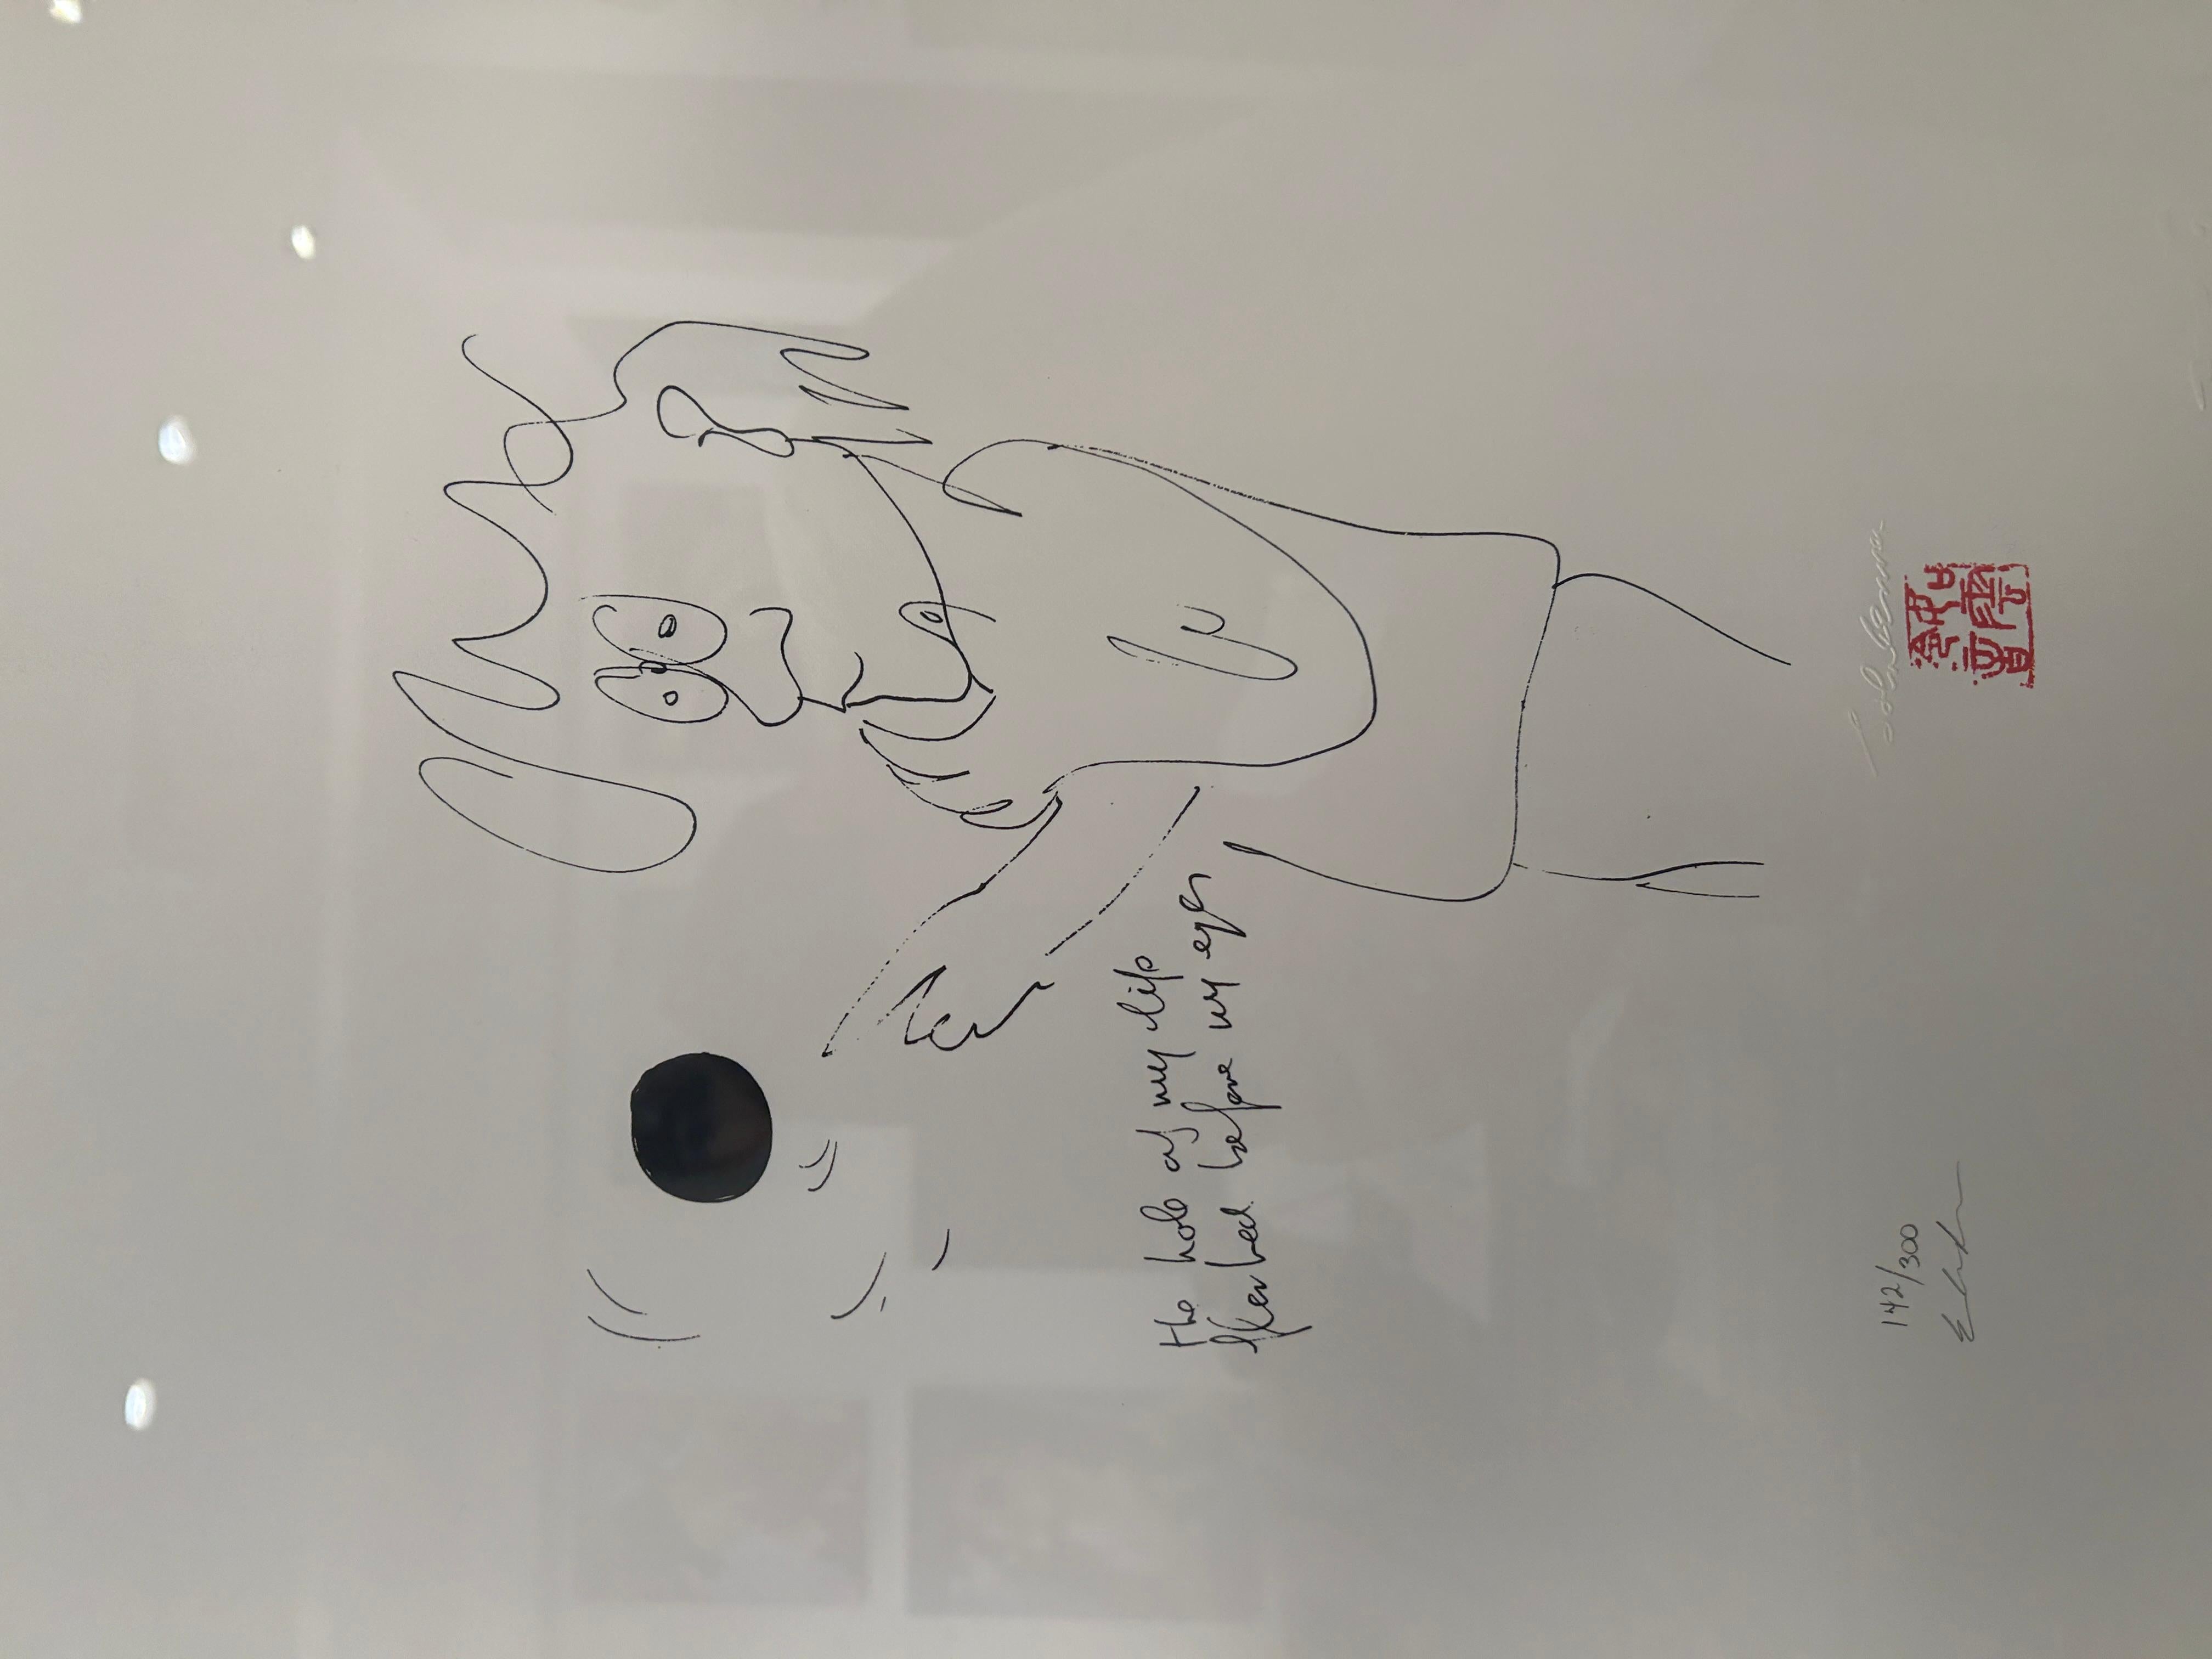 The Hole Of My Life - Print by John Lennon